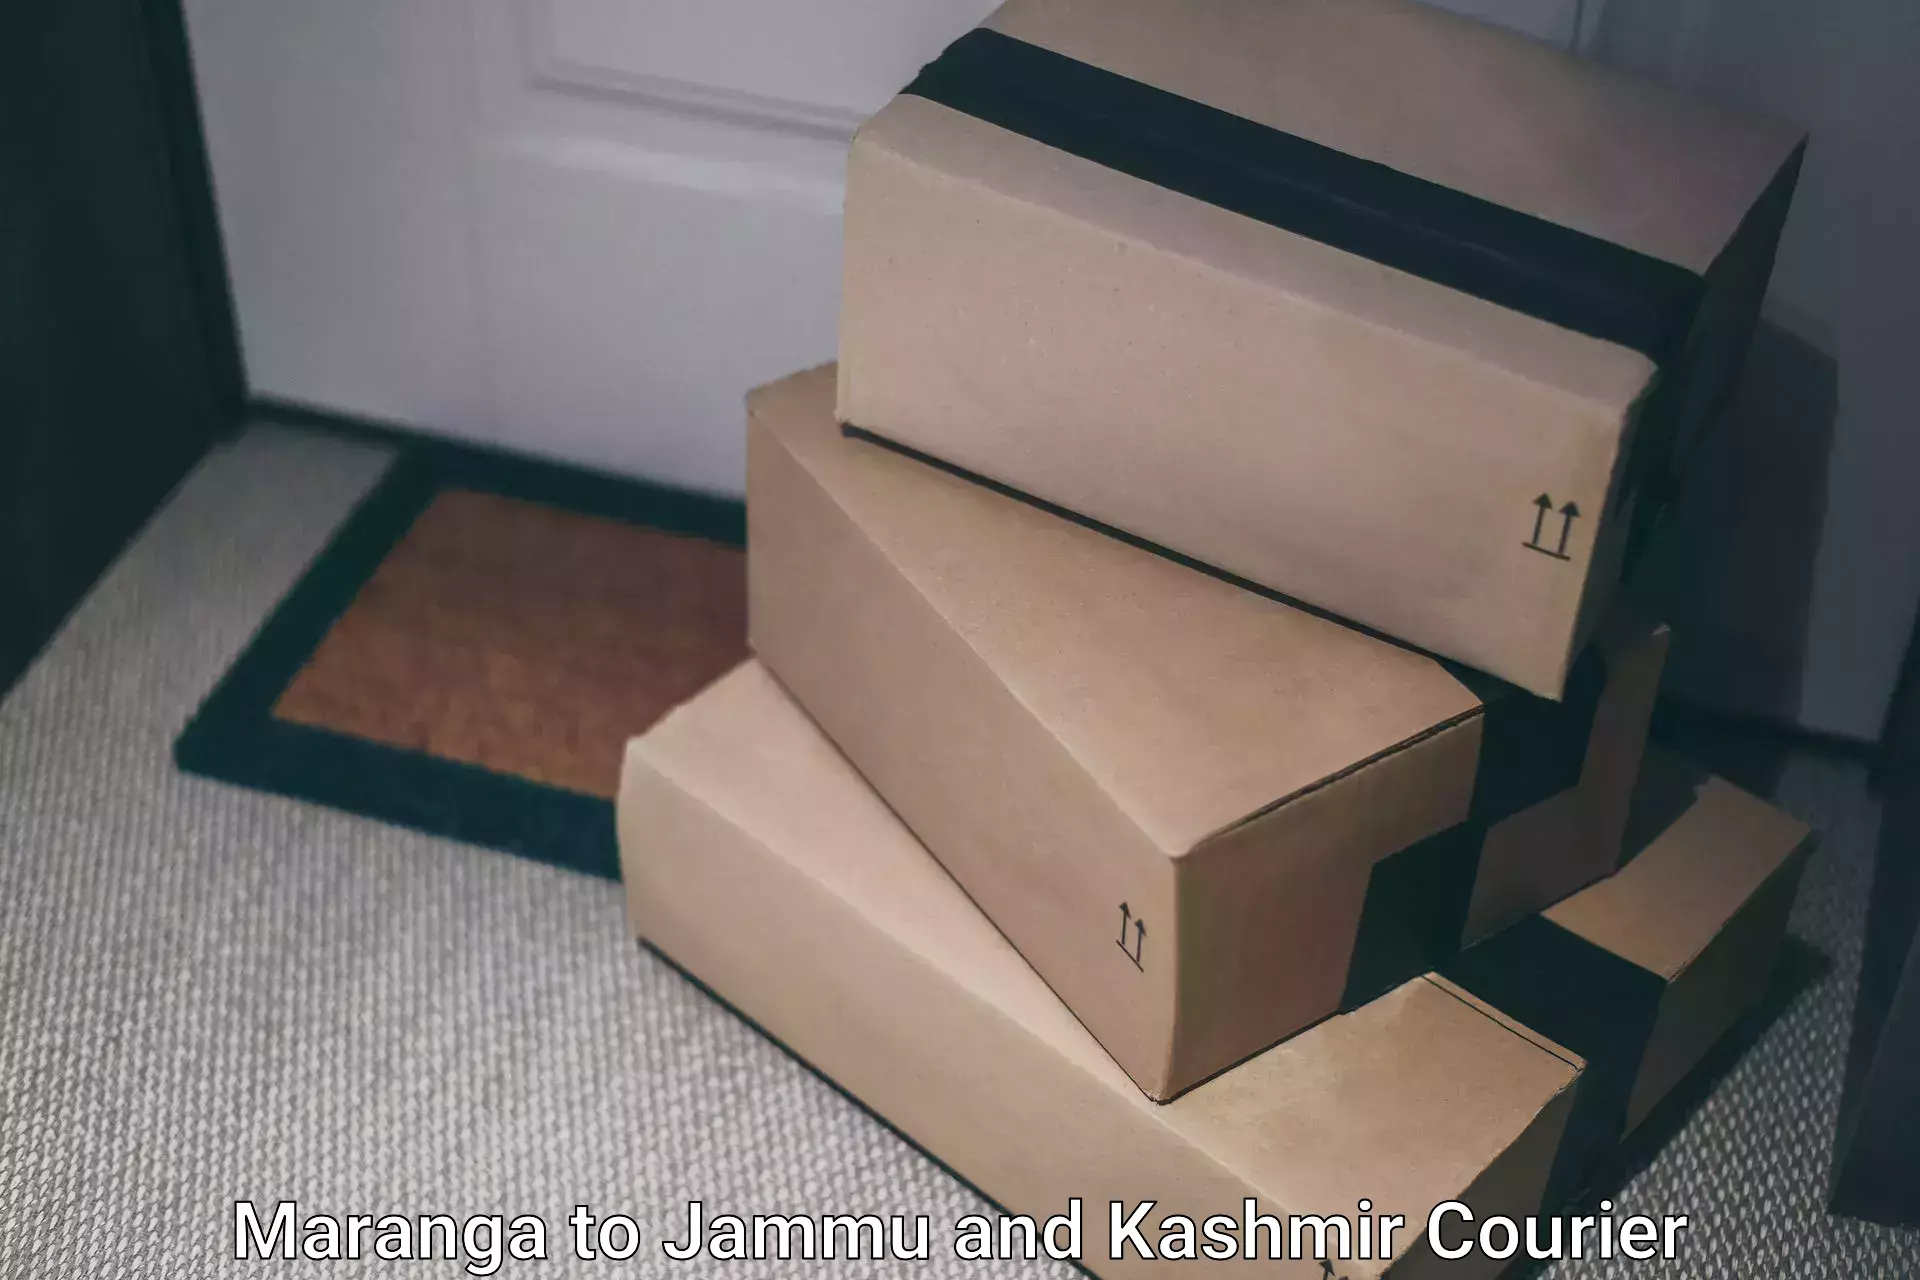 24/7 courier service Maranga to Srinagar Kashmir